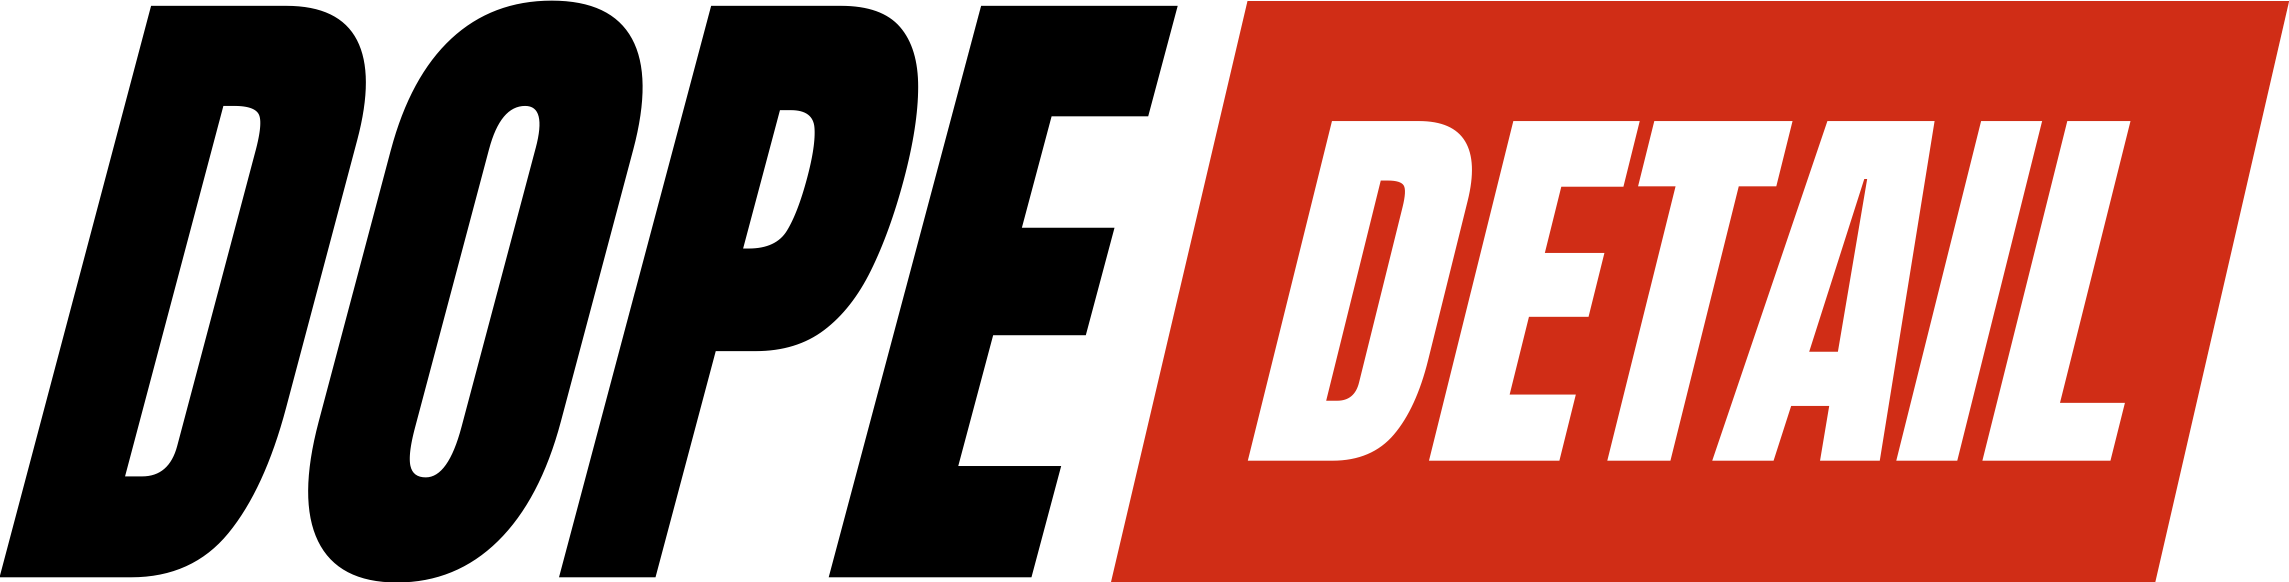 dopedetail Logo Lite Black_Slim